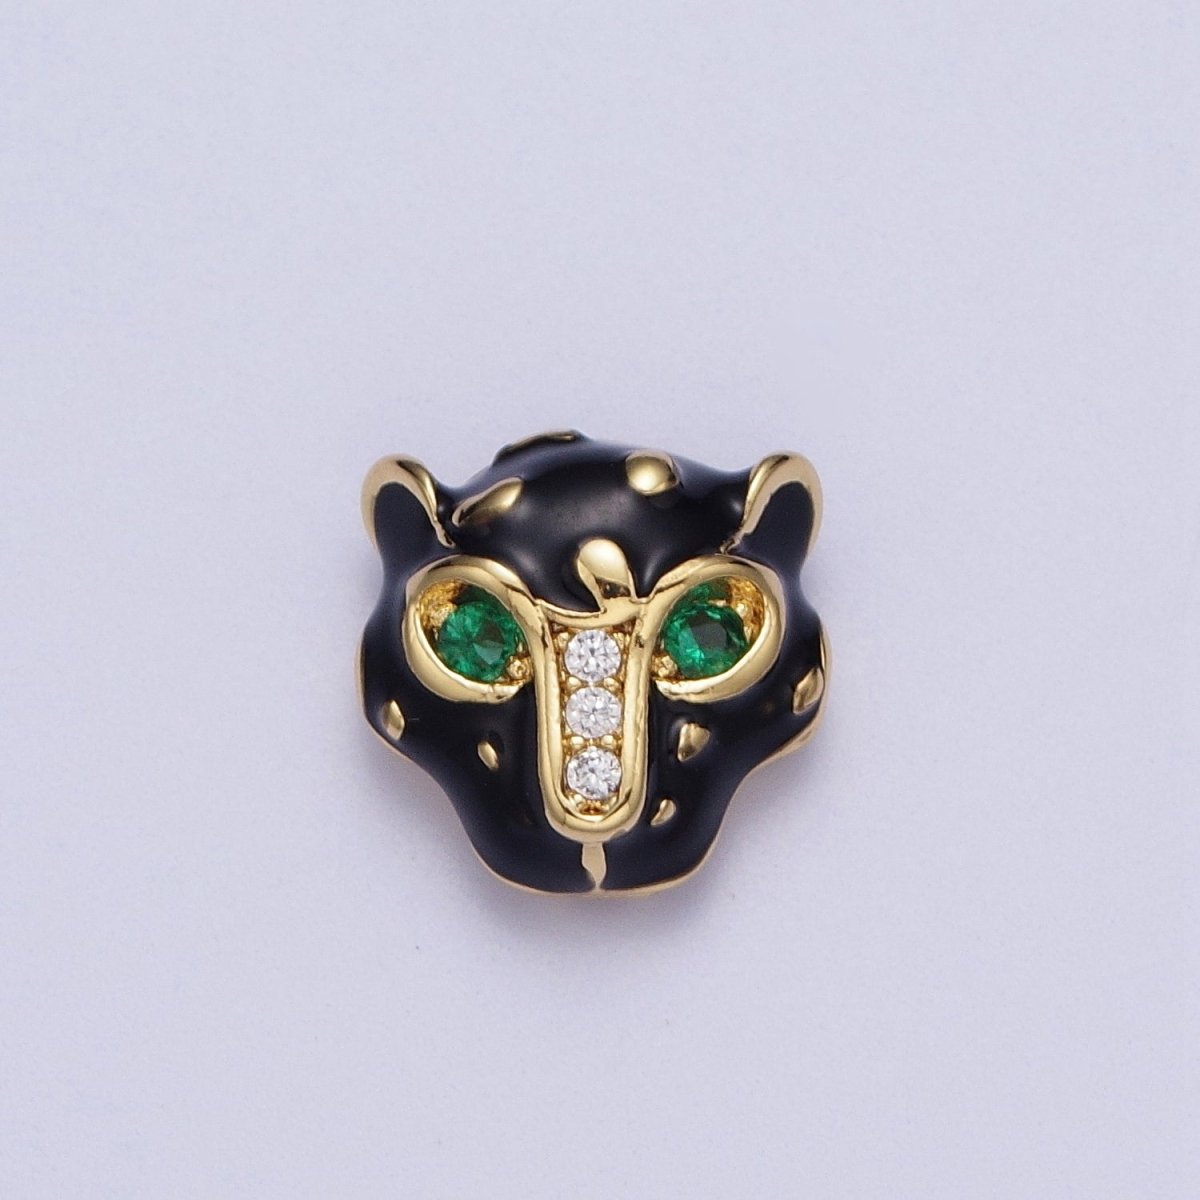 24K Gold Filled Green Eyed Black Panther Enamel Spacer Bead in Rose Gold, Black, Gold, Silver | B-010 B-013 B-005 B-046 - DLUXCA